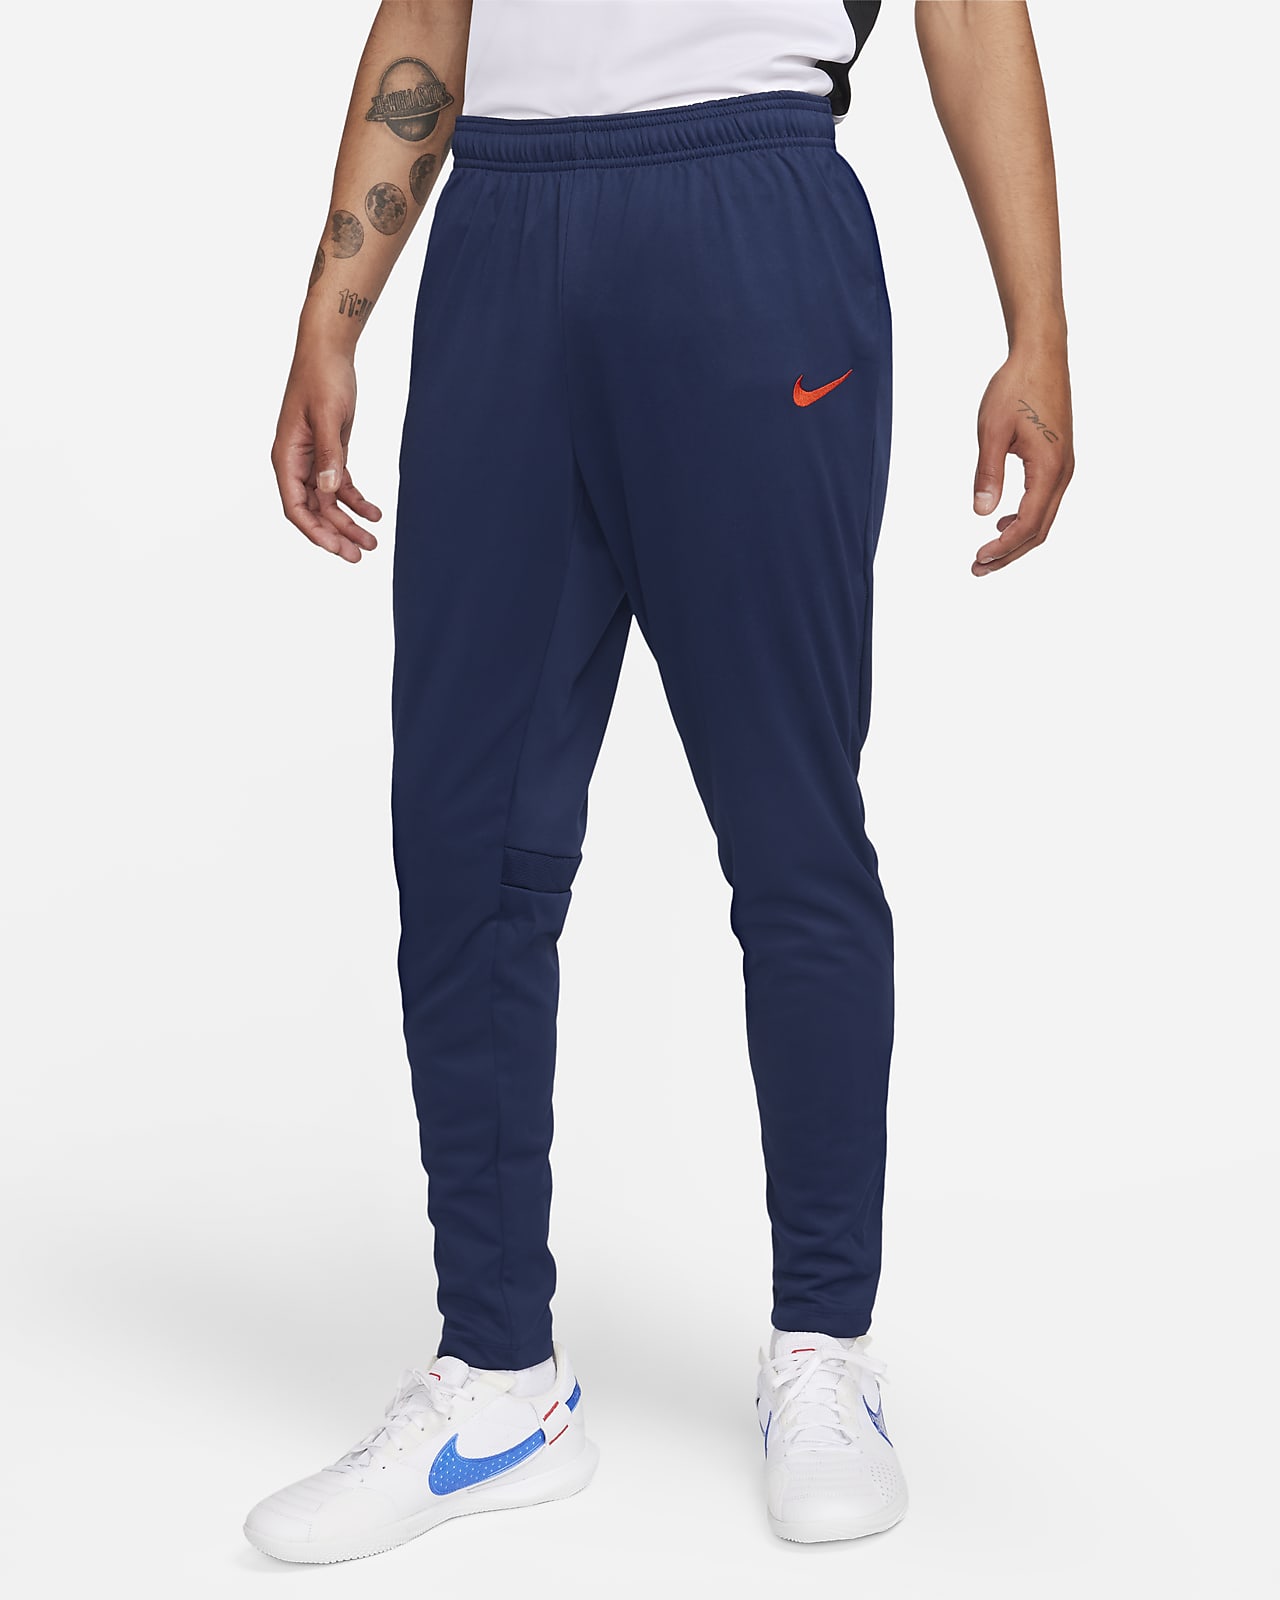 Club América Academy Pro Men's Nike Dri-FIT Knit Soccer Pants